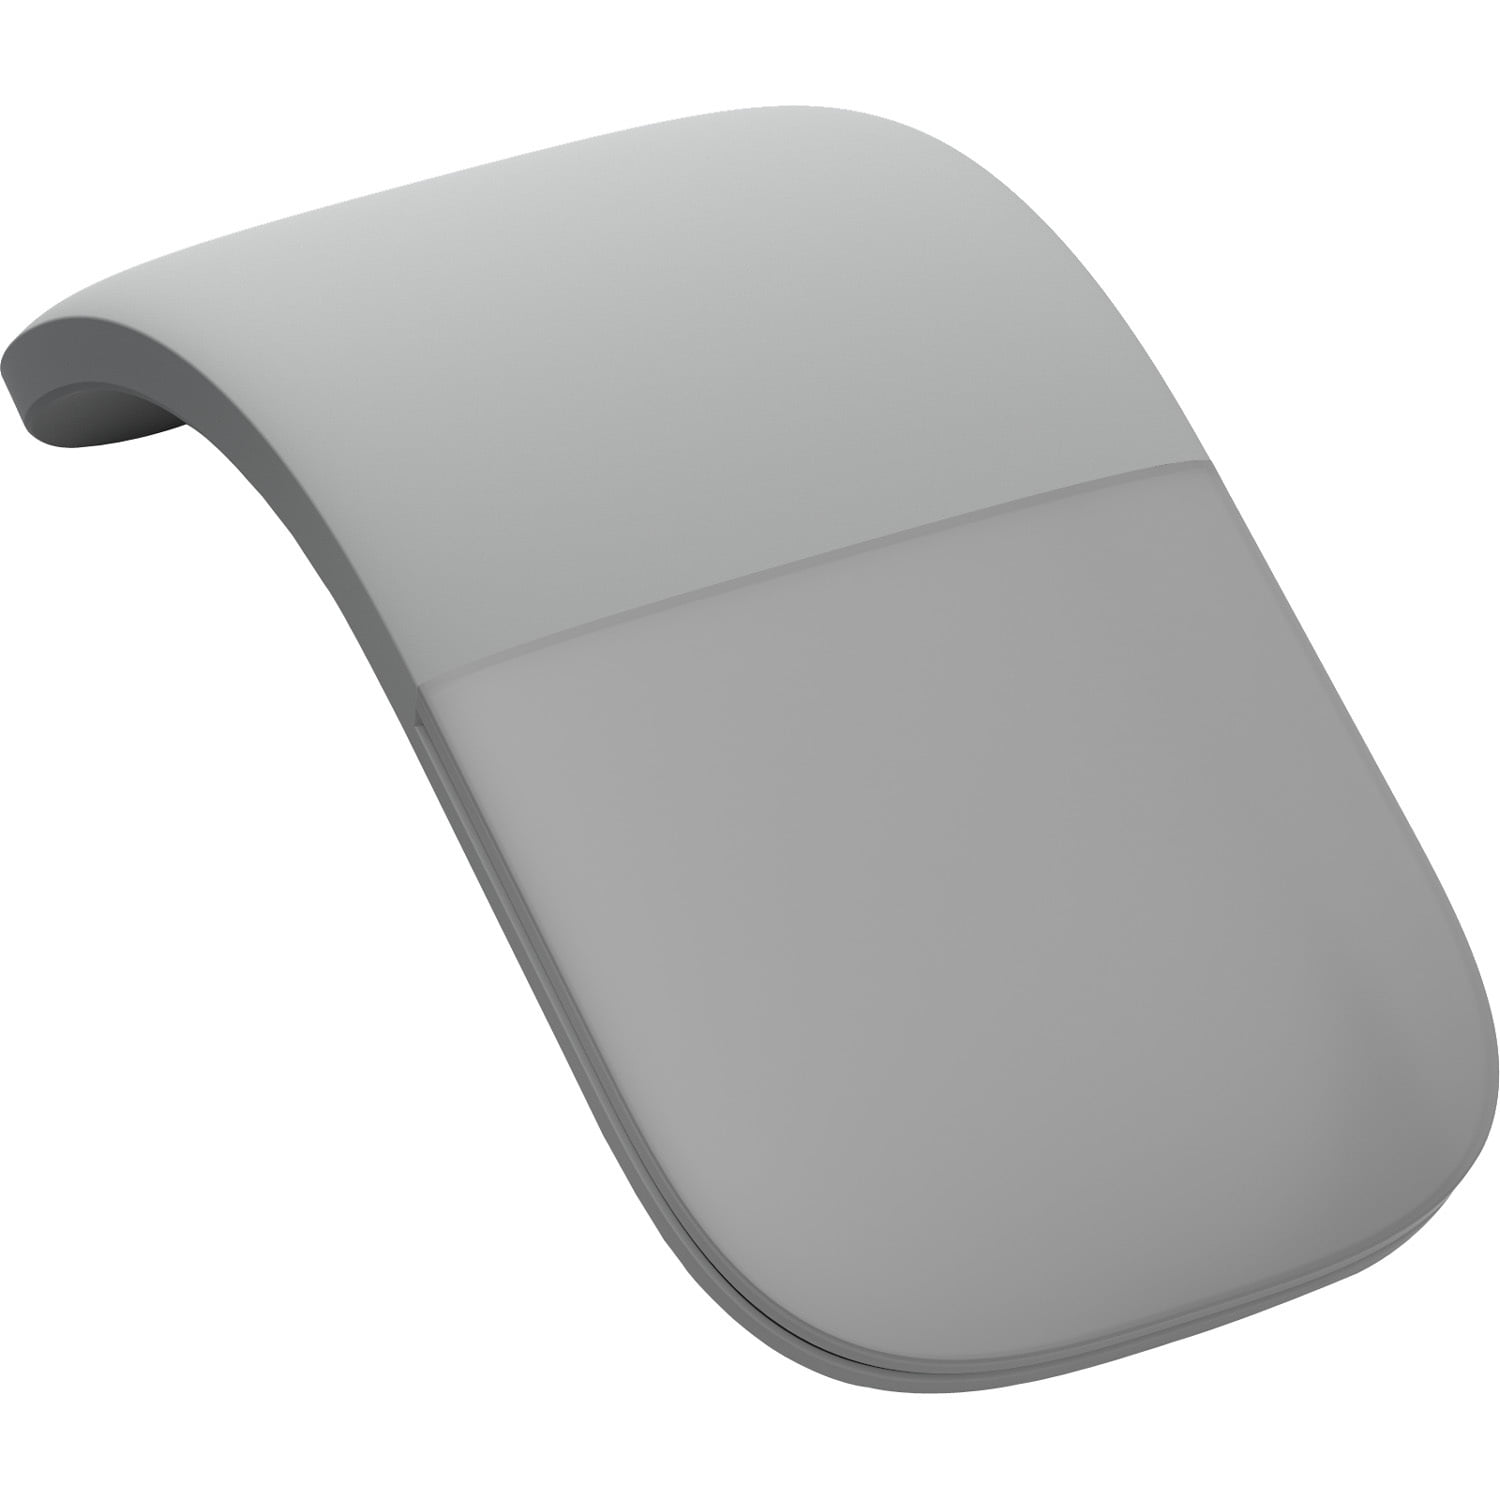 Microsoft Surface Arc Mouse, Light Grey, CZV-00001